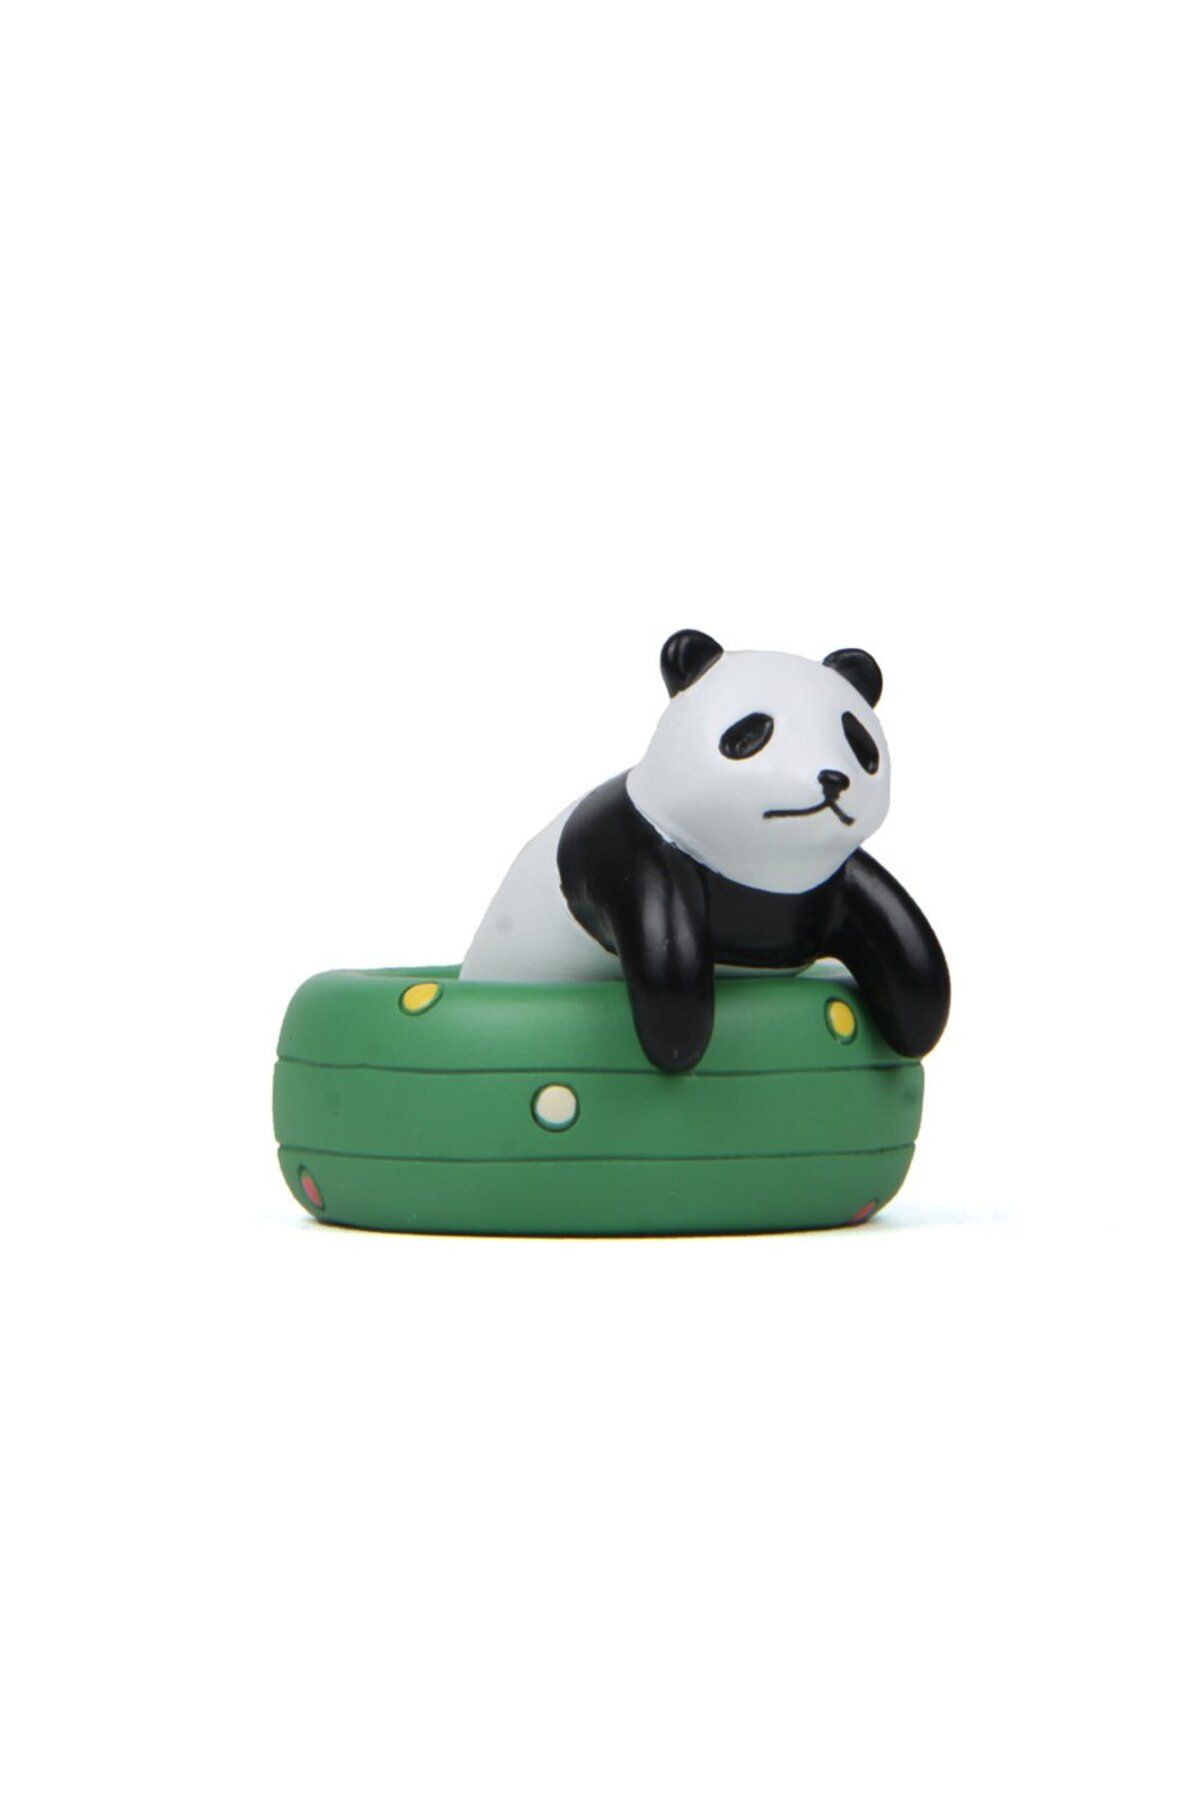 Miniminti Yatan Panda Figürü